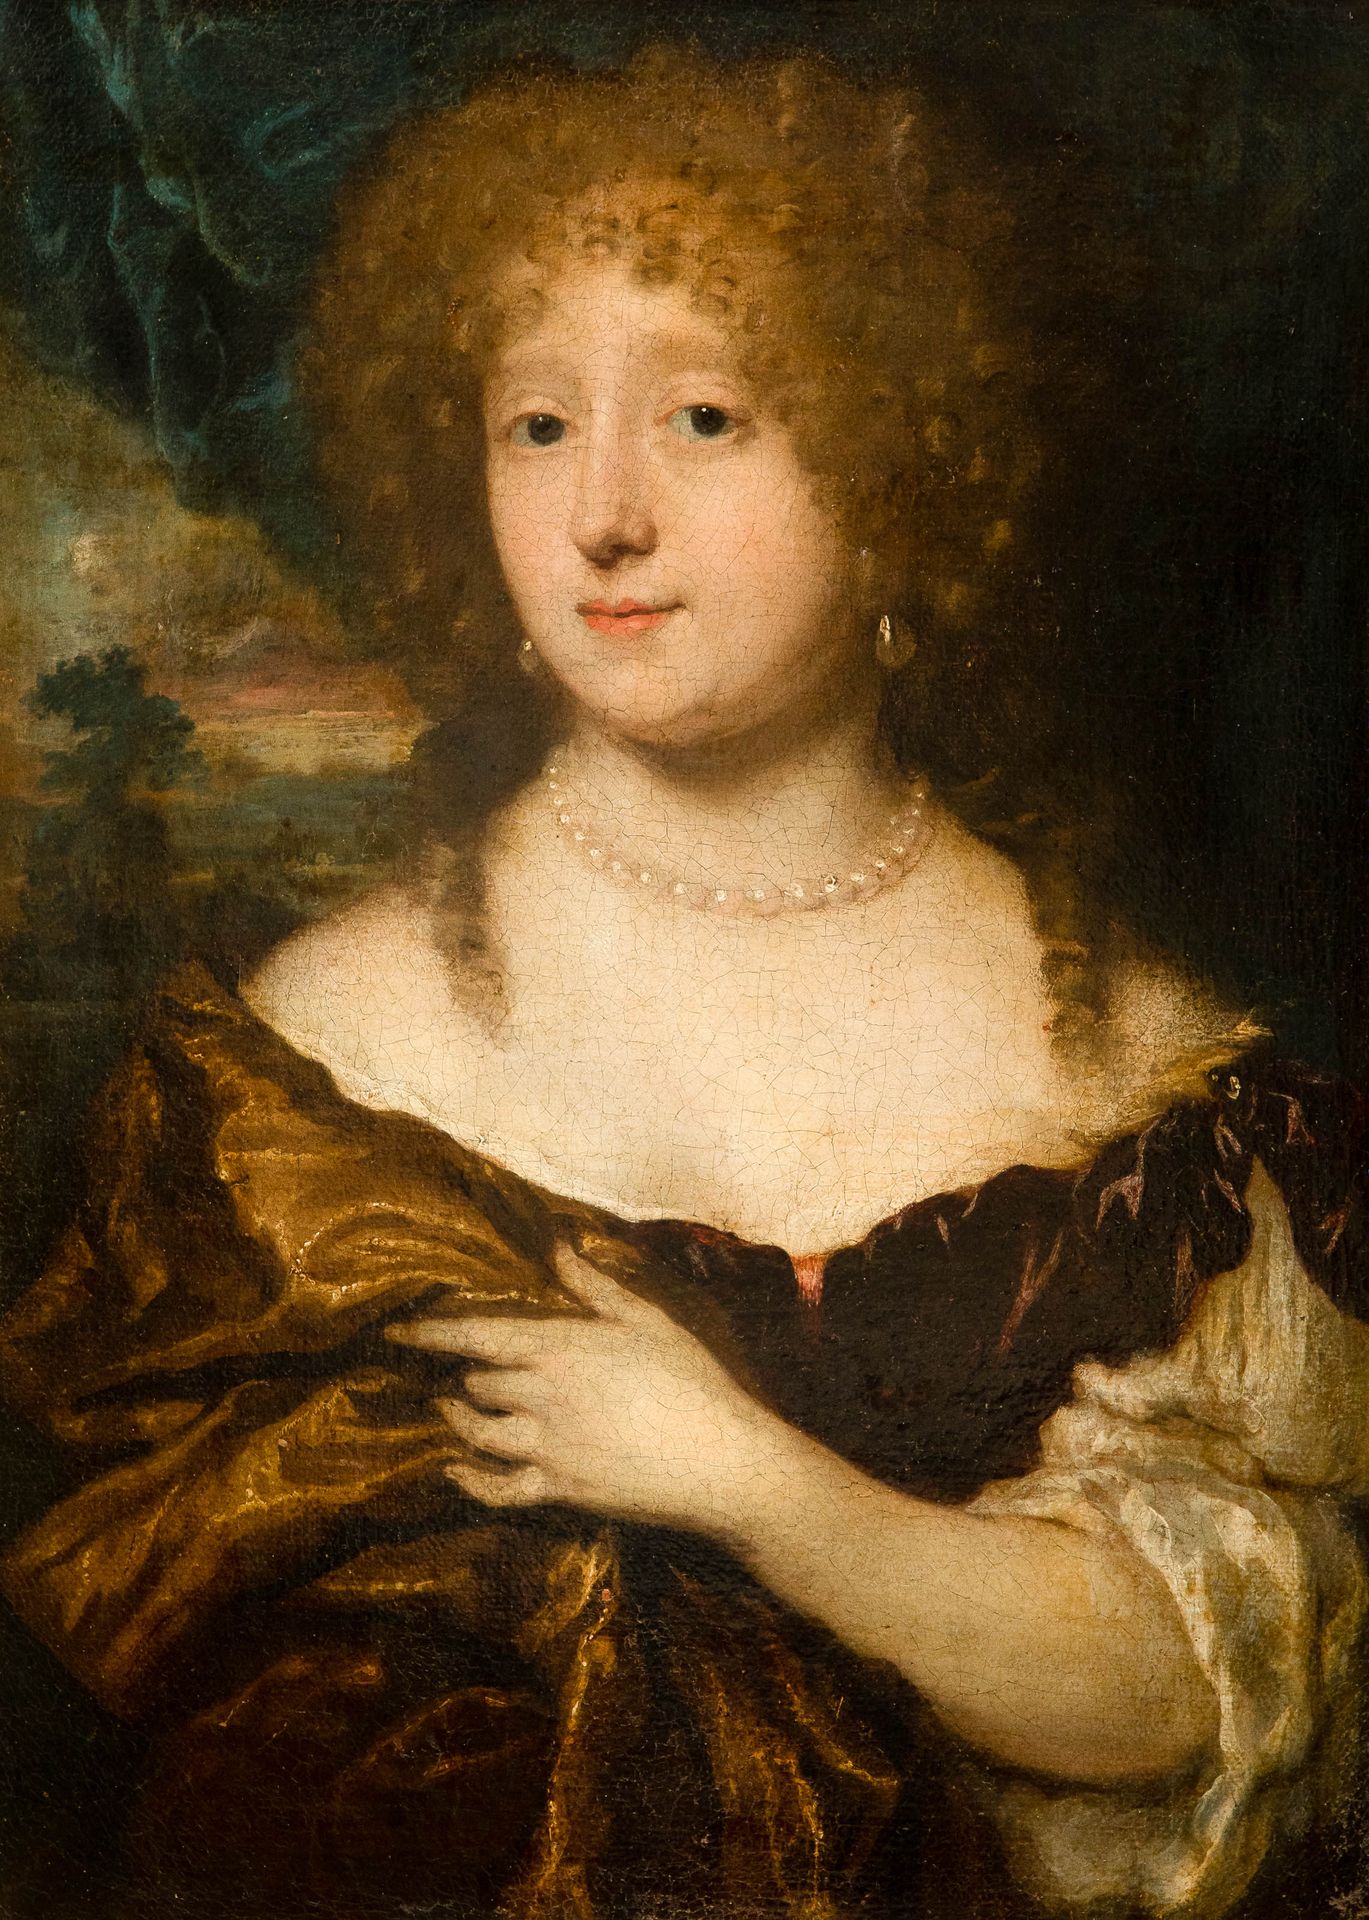 NICOLAAS MAES (1634-1693) (归属)

景观前戴珍珠项链的女士肖像。

布衣（凋零）。

这幅精致的肖像画展示了与Nicolaas Ma&hellip;